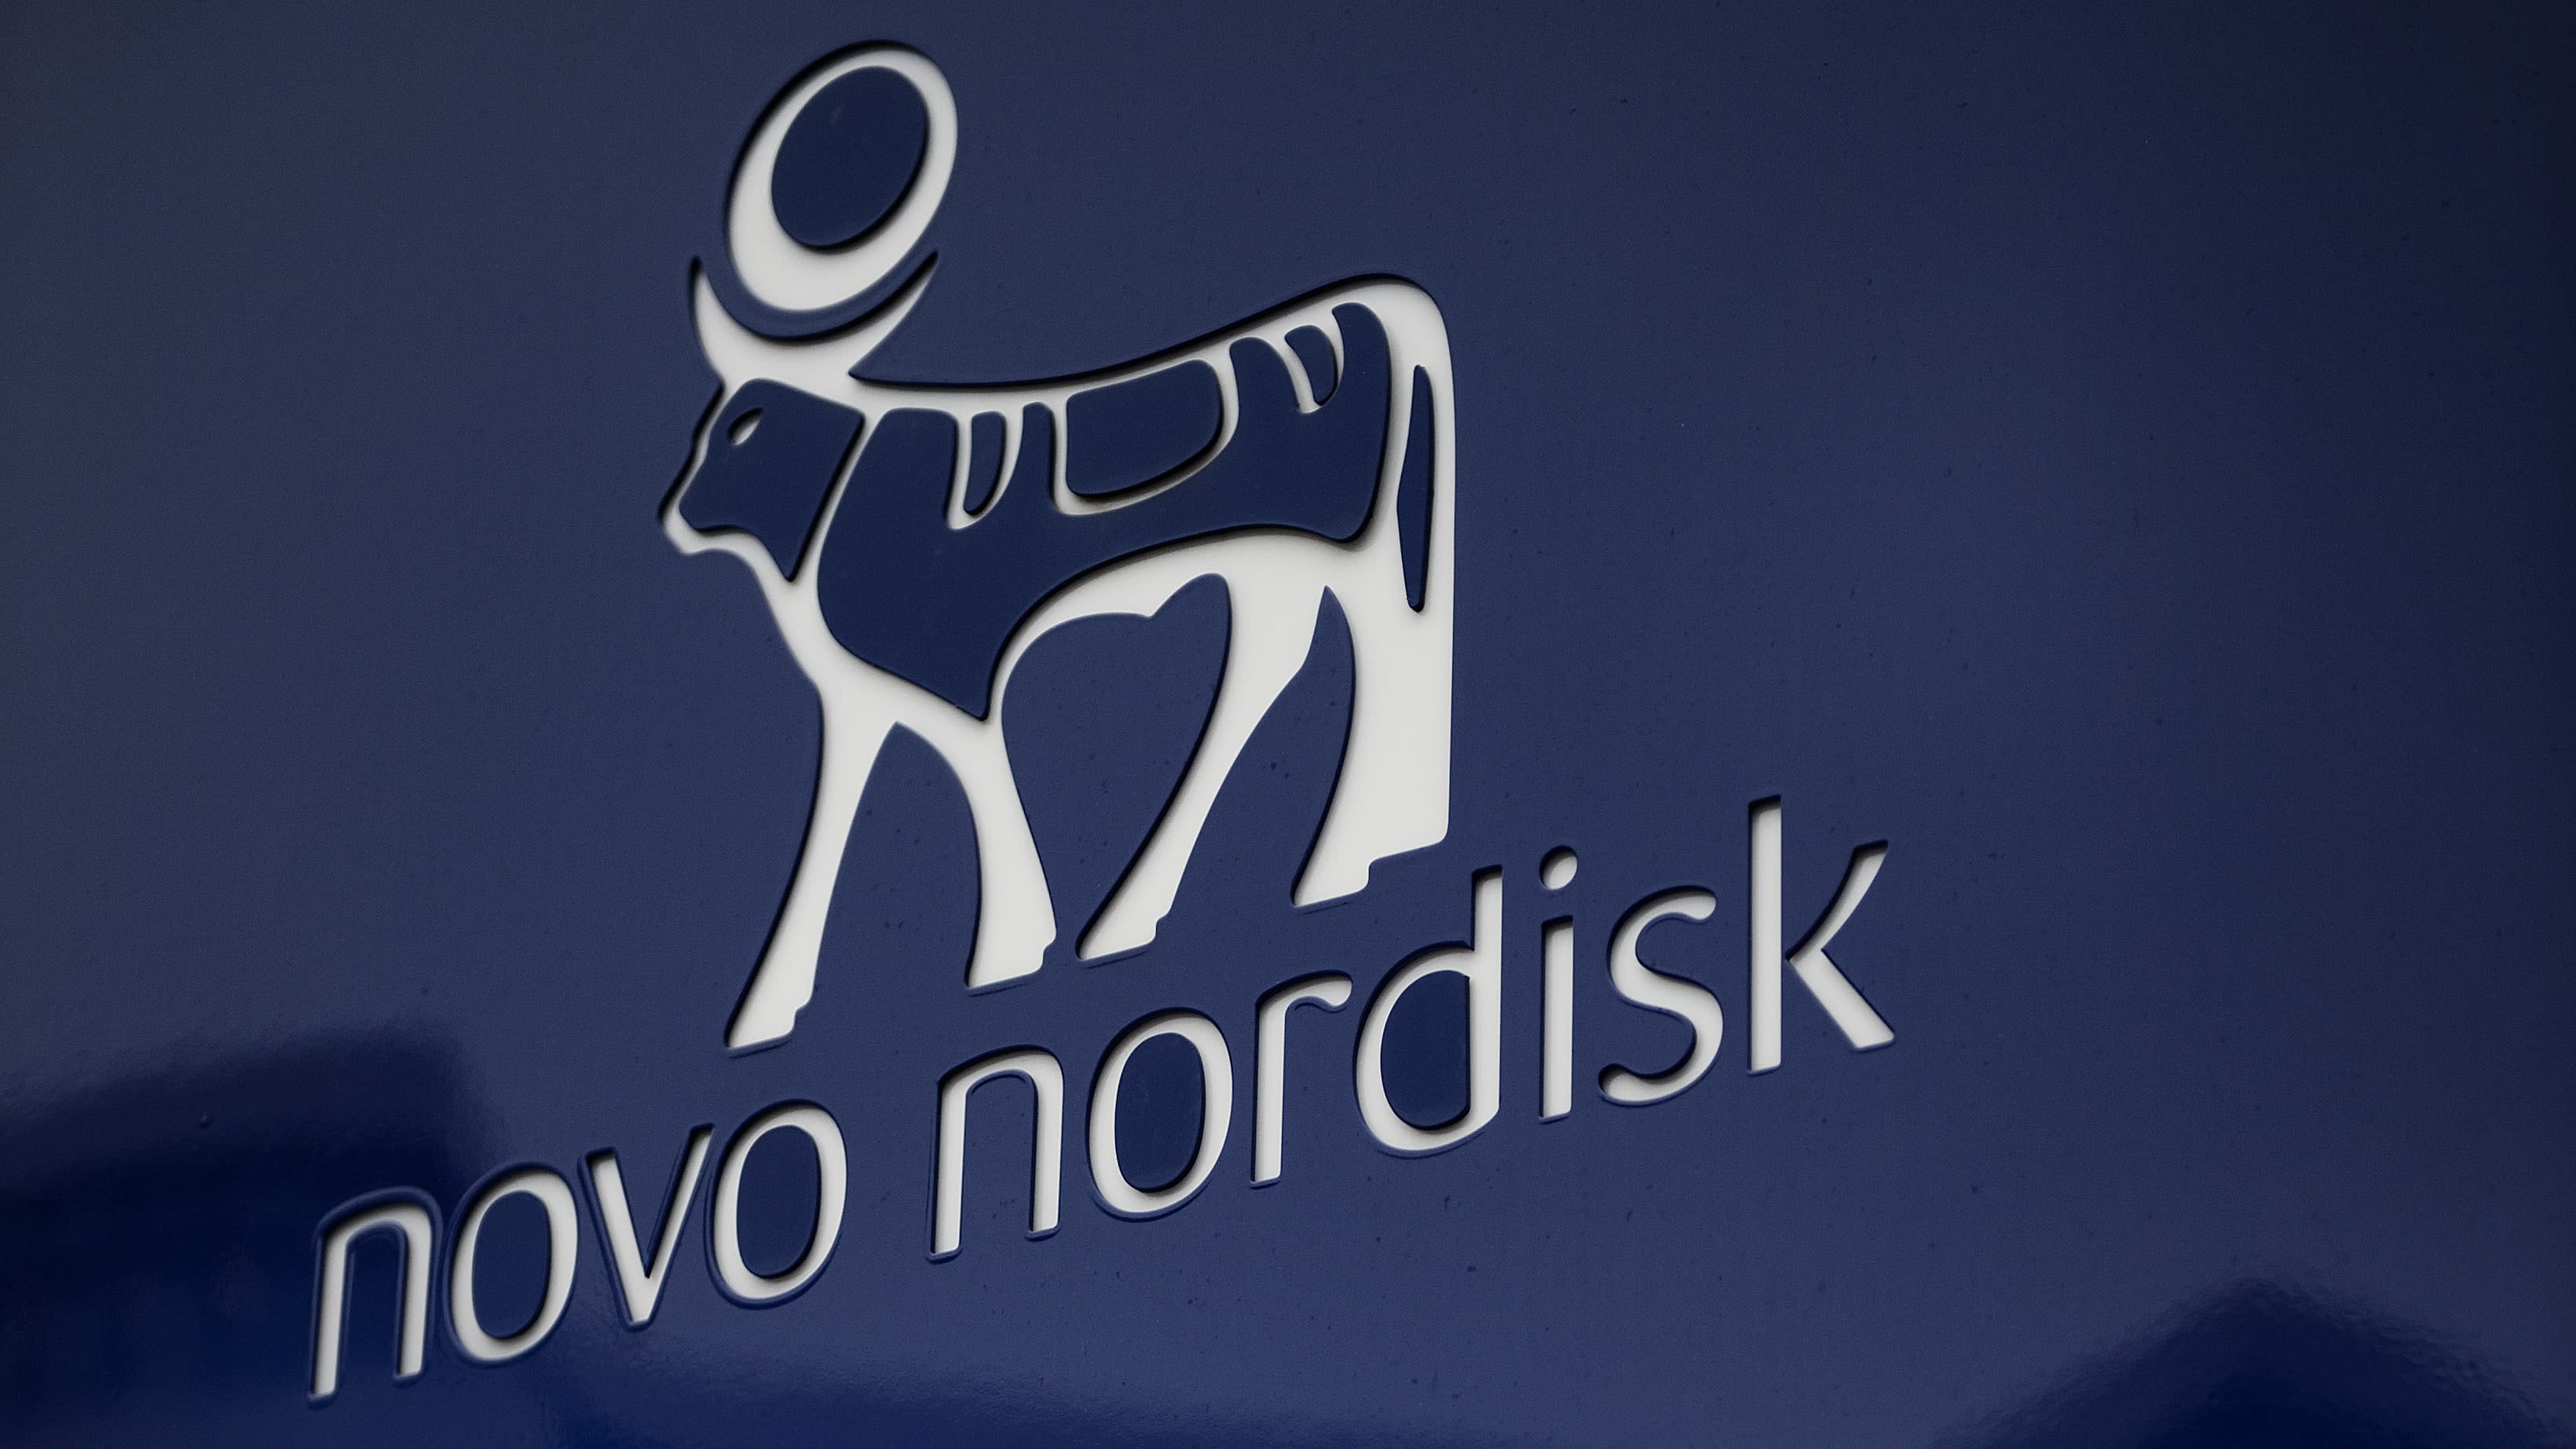 Novo Nordisk Shares Soar, Rivaling LVMH as Europe's Biggest